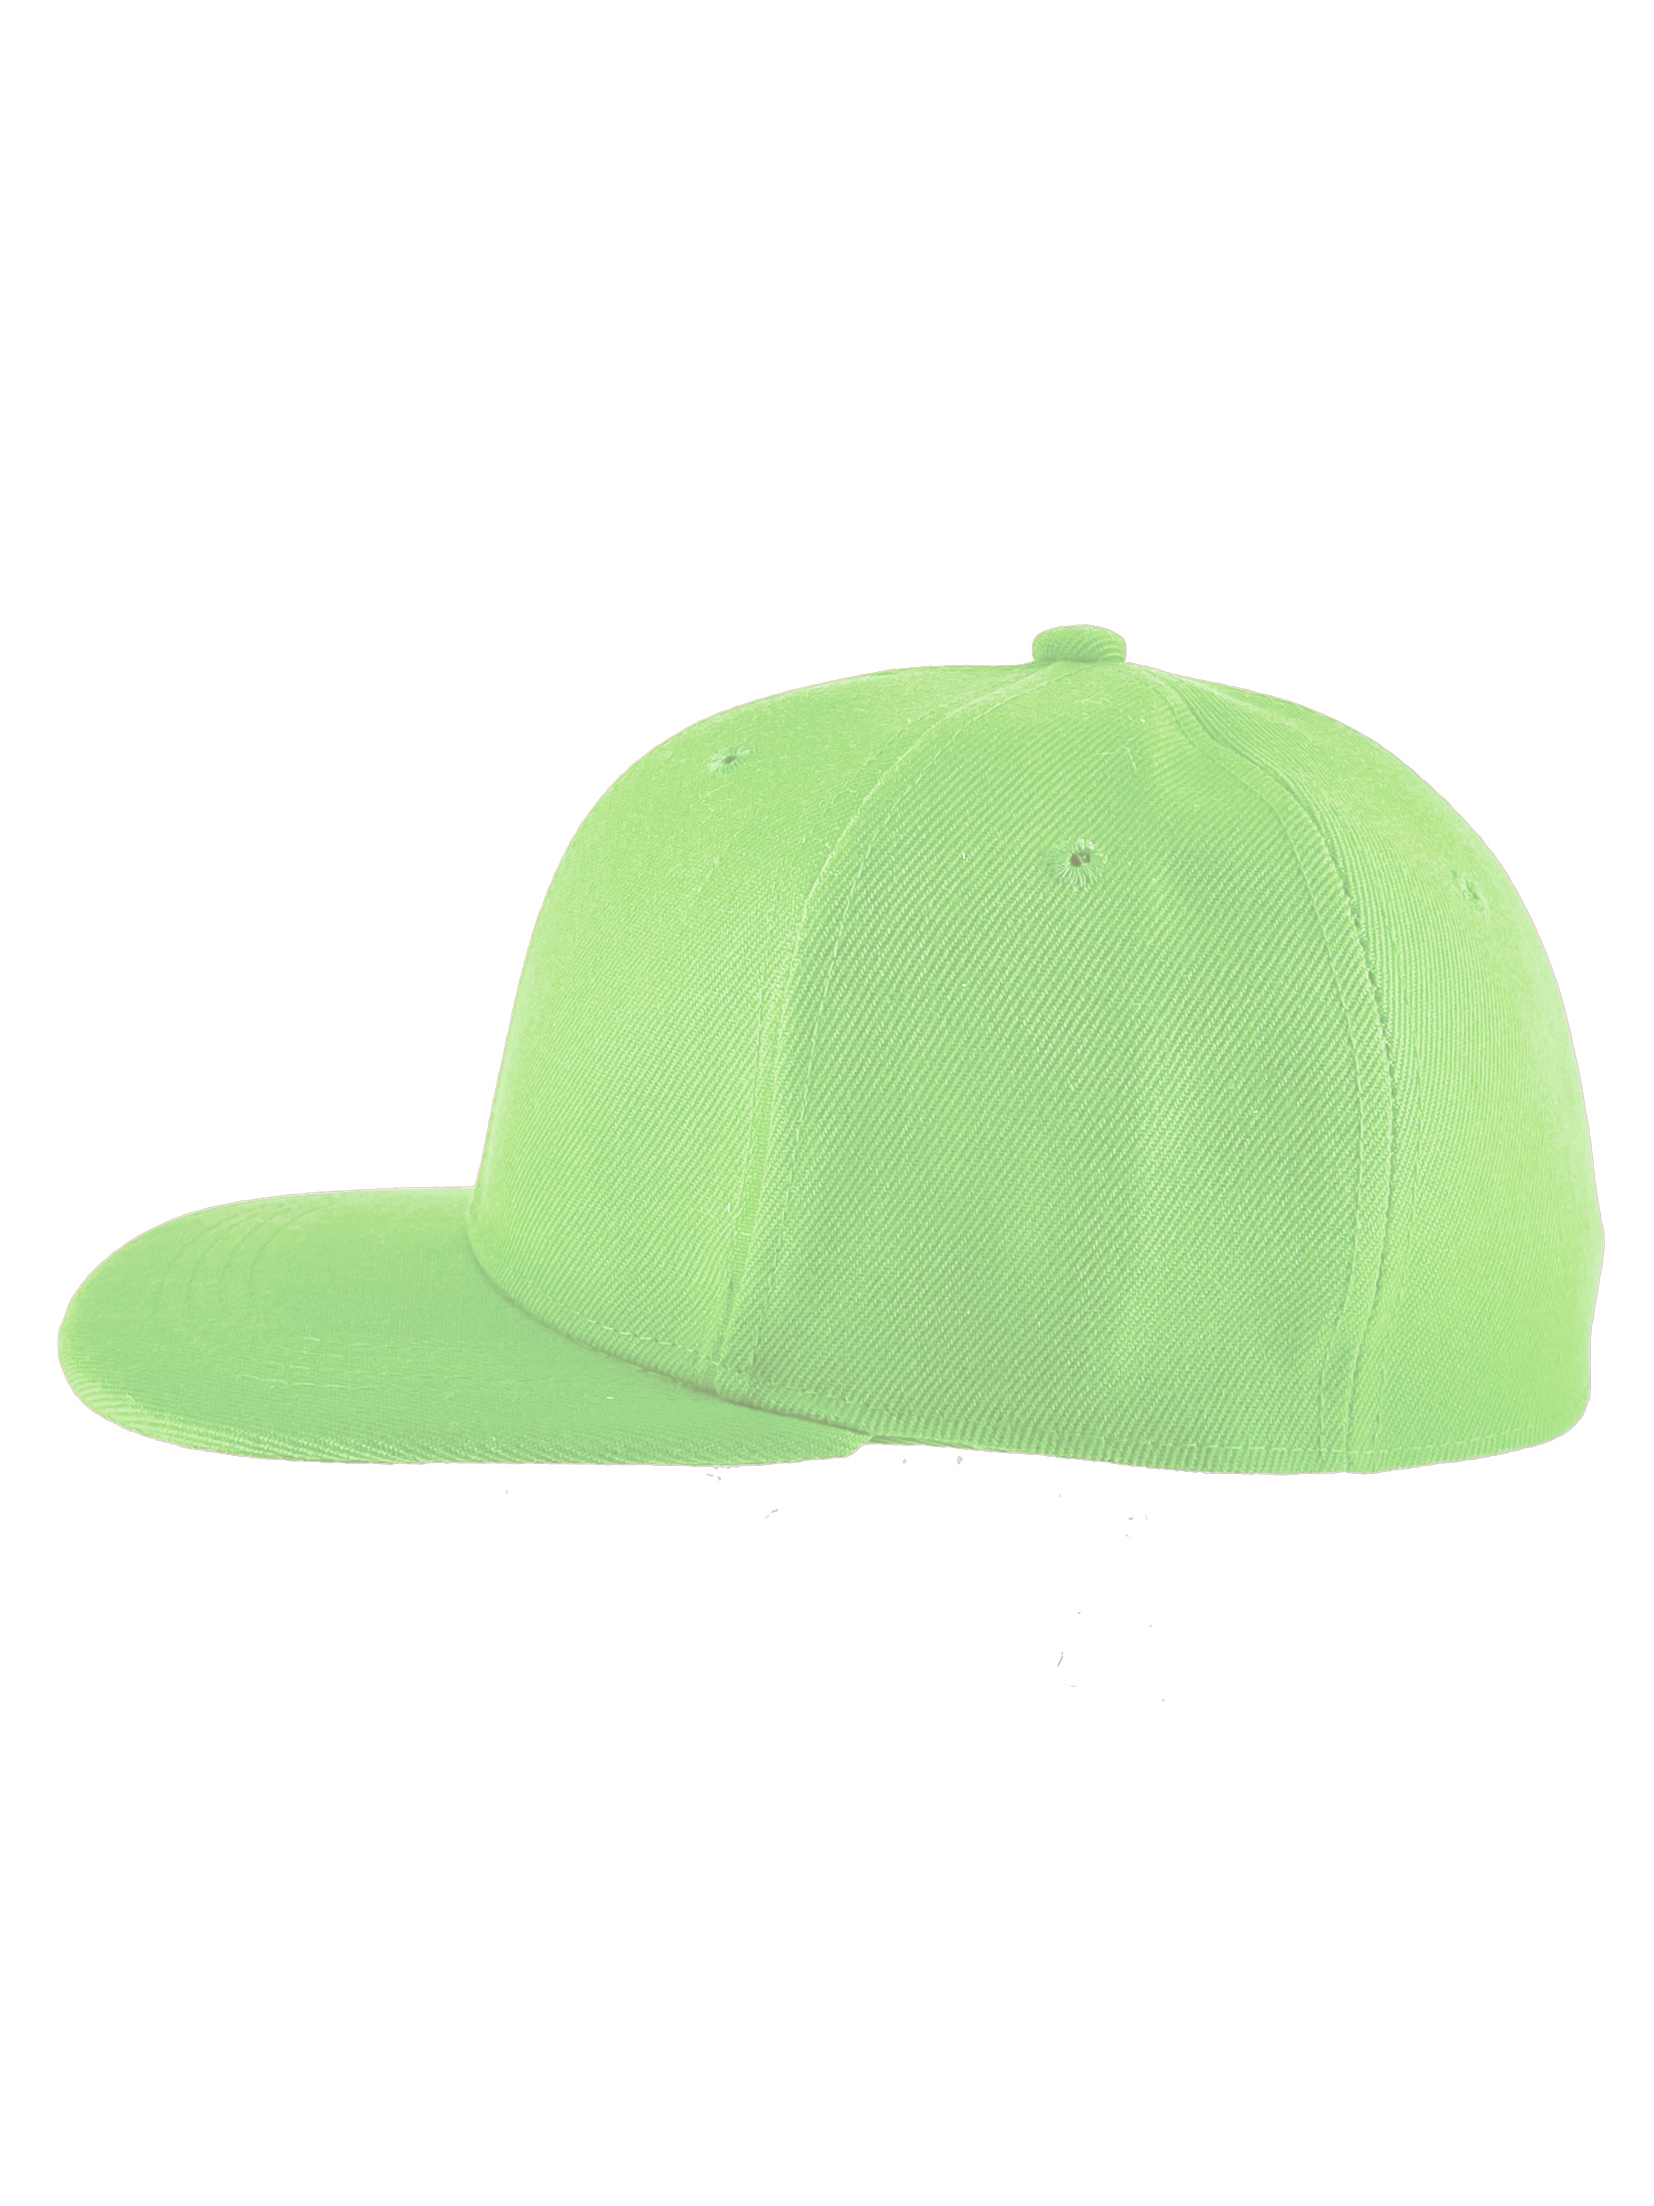 Top Headwear Plain Flat Bill Fitted Hat, Neon Green 7 3/8 - image 3 of 4